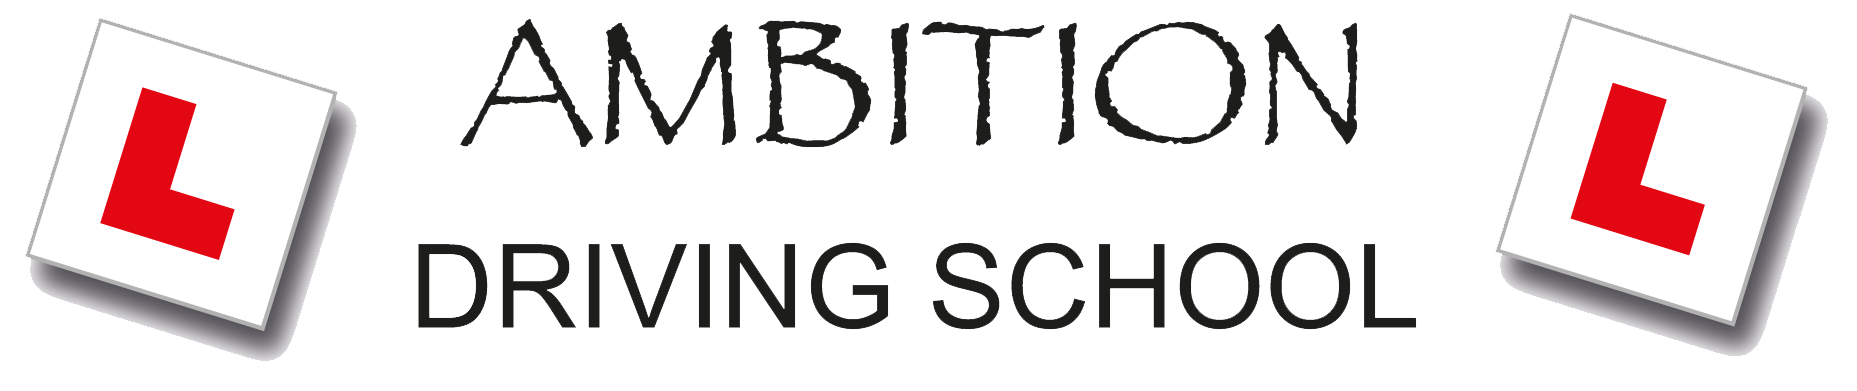 Ambition Driving school full logo